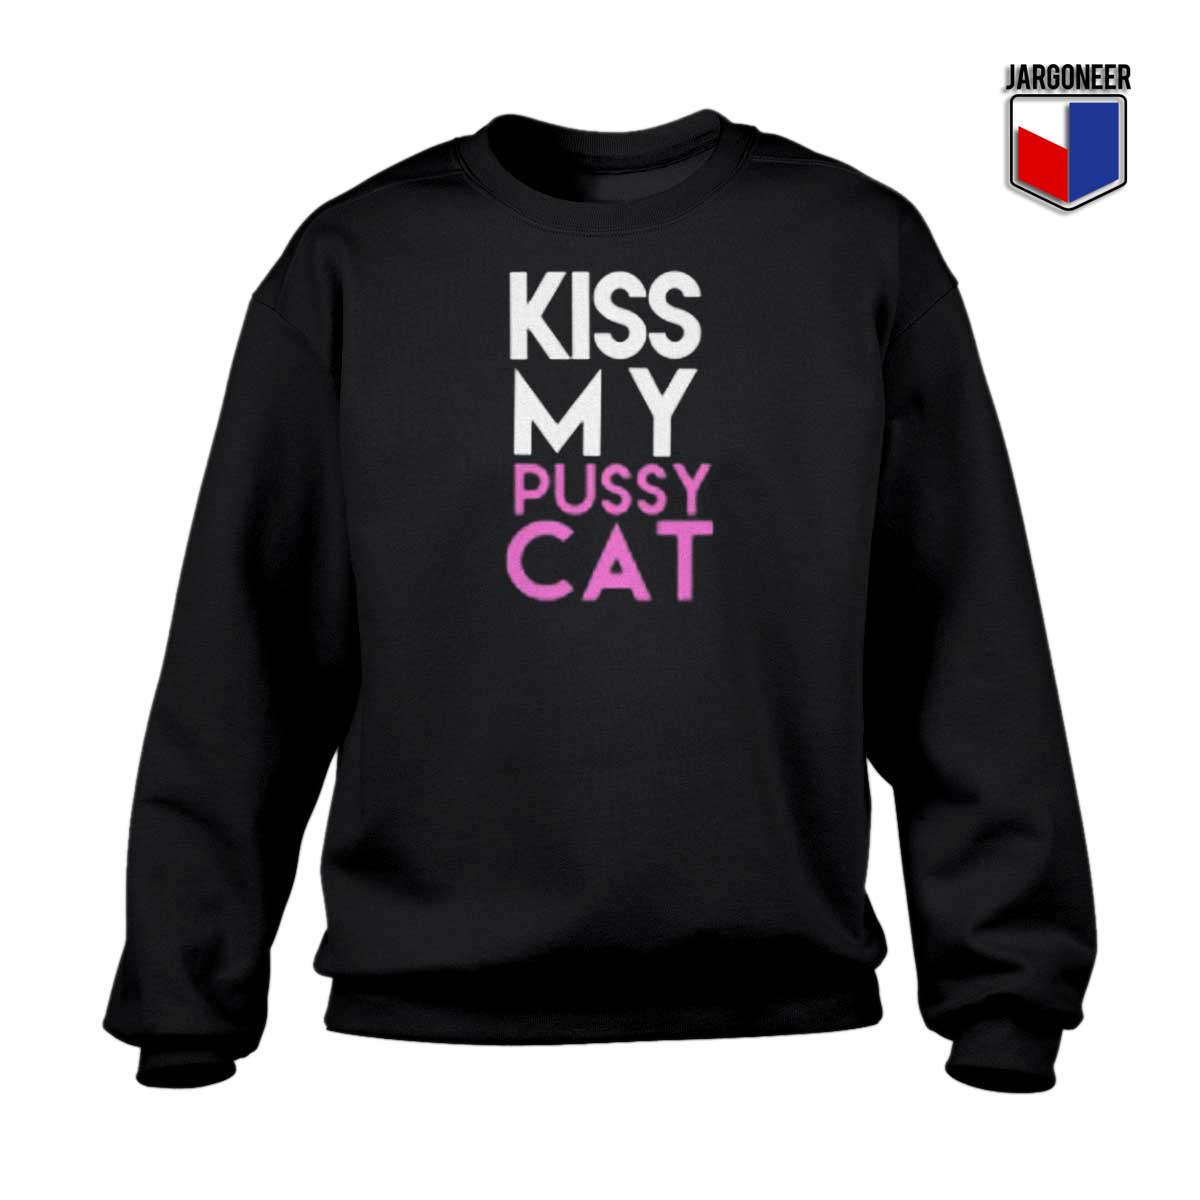 Kiss My Pussy Cat Sweatshirt - Shop Unique Graphic Cool Shirt Designs